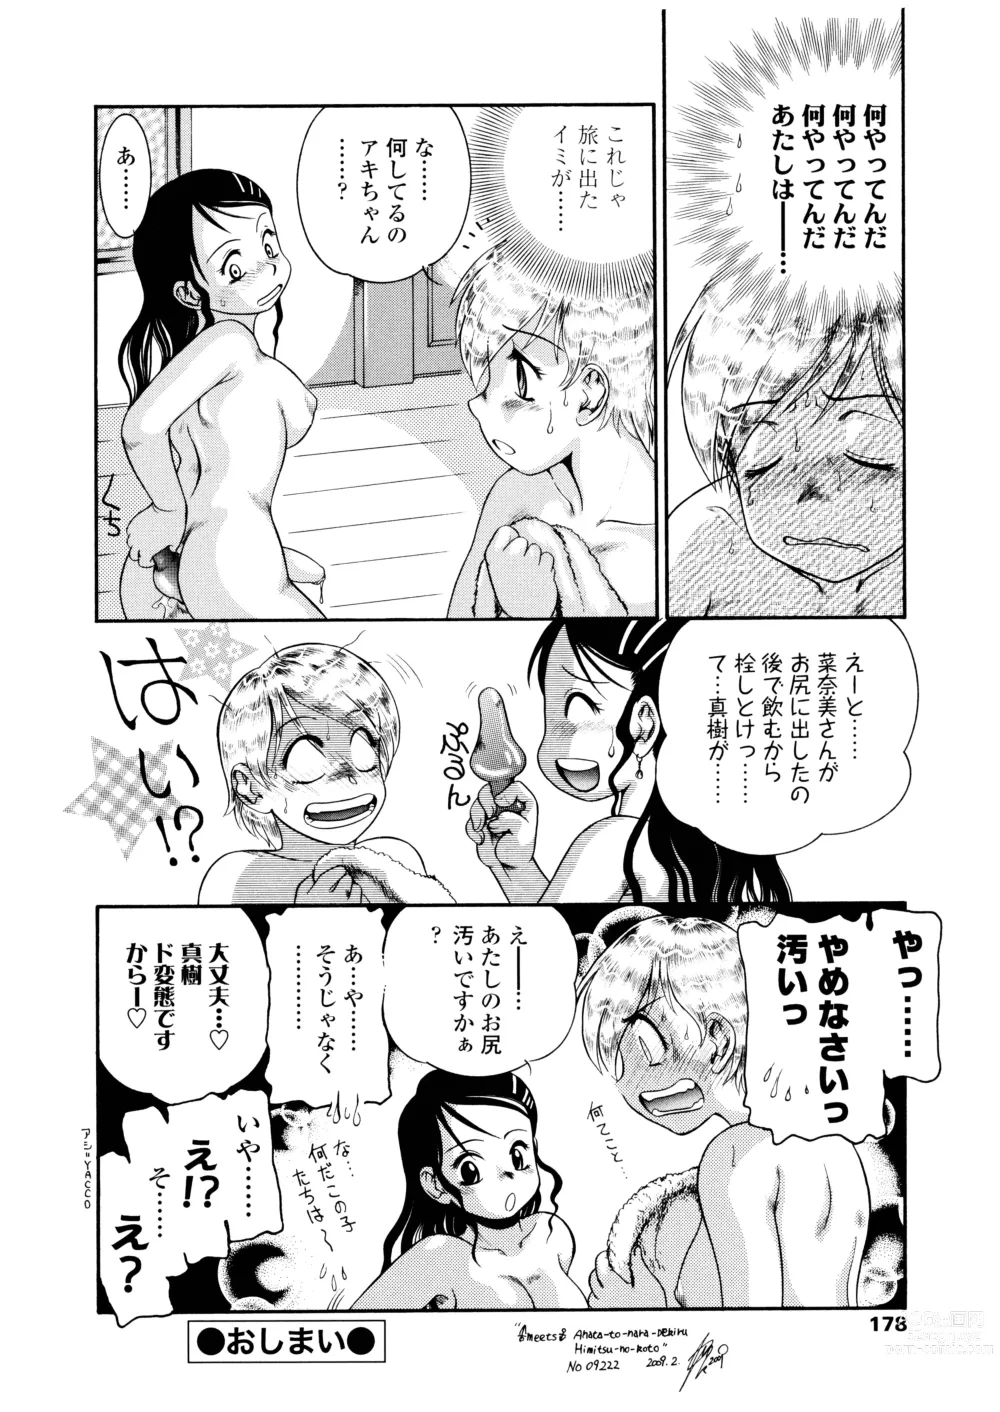 Page 179 of manga Futanari Ism